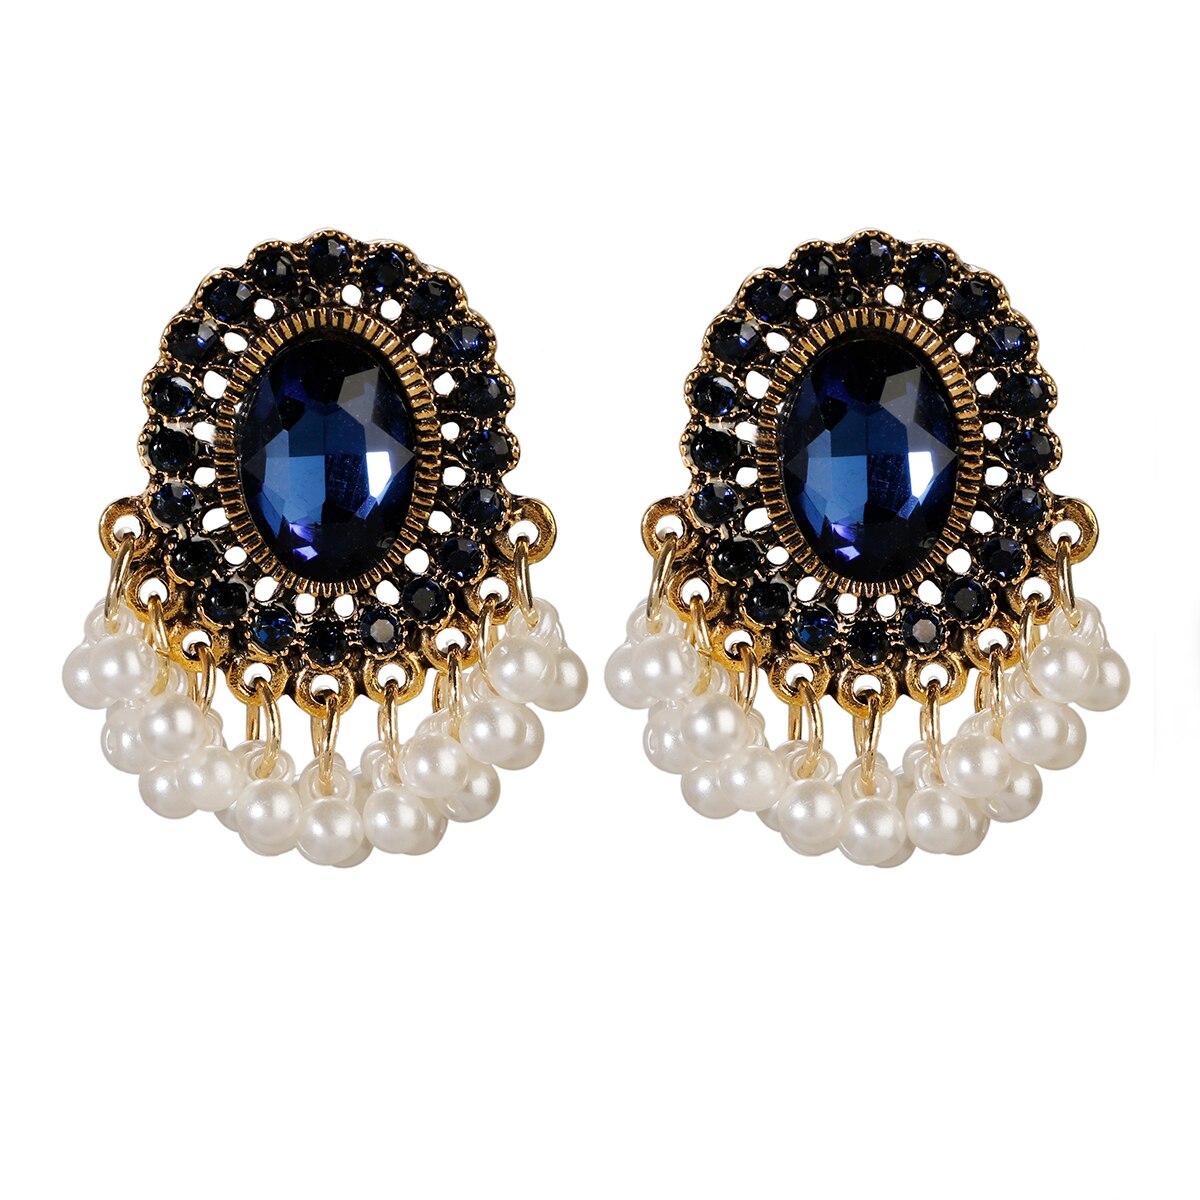 Classic-Blue-Crystal-Indian-Earrings-For-Women-Pendientes-Luxury-Pearl-Tassel-Earrings-Jewelry-Brinc-1005003753178643-4